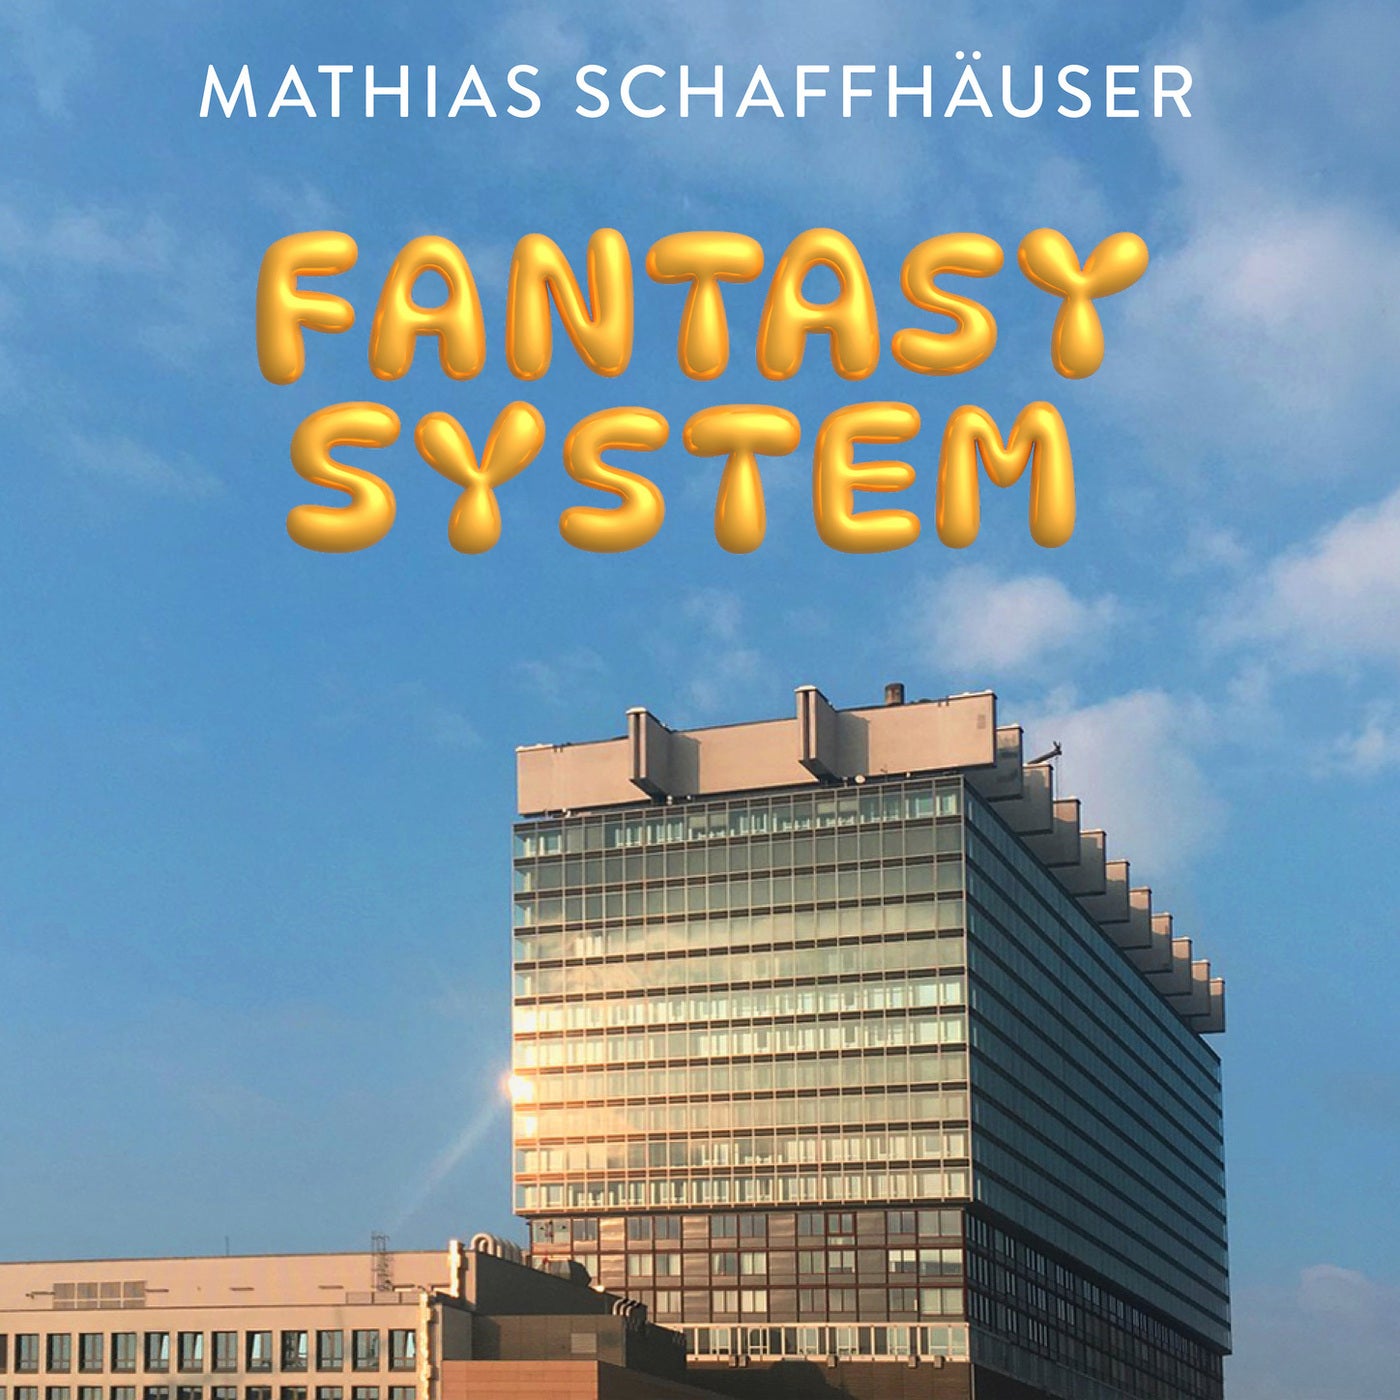 Fantasy System EP